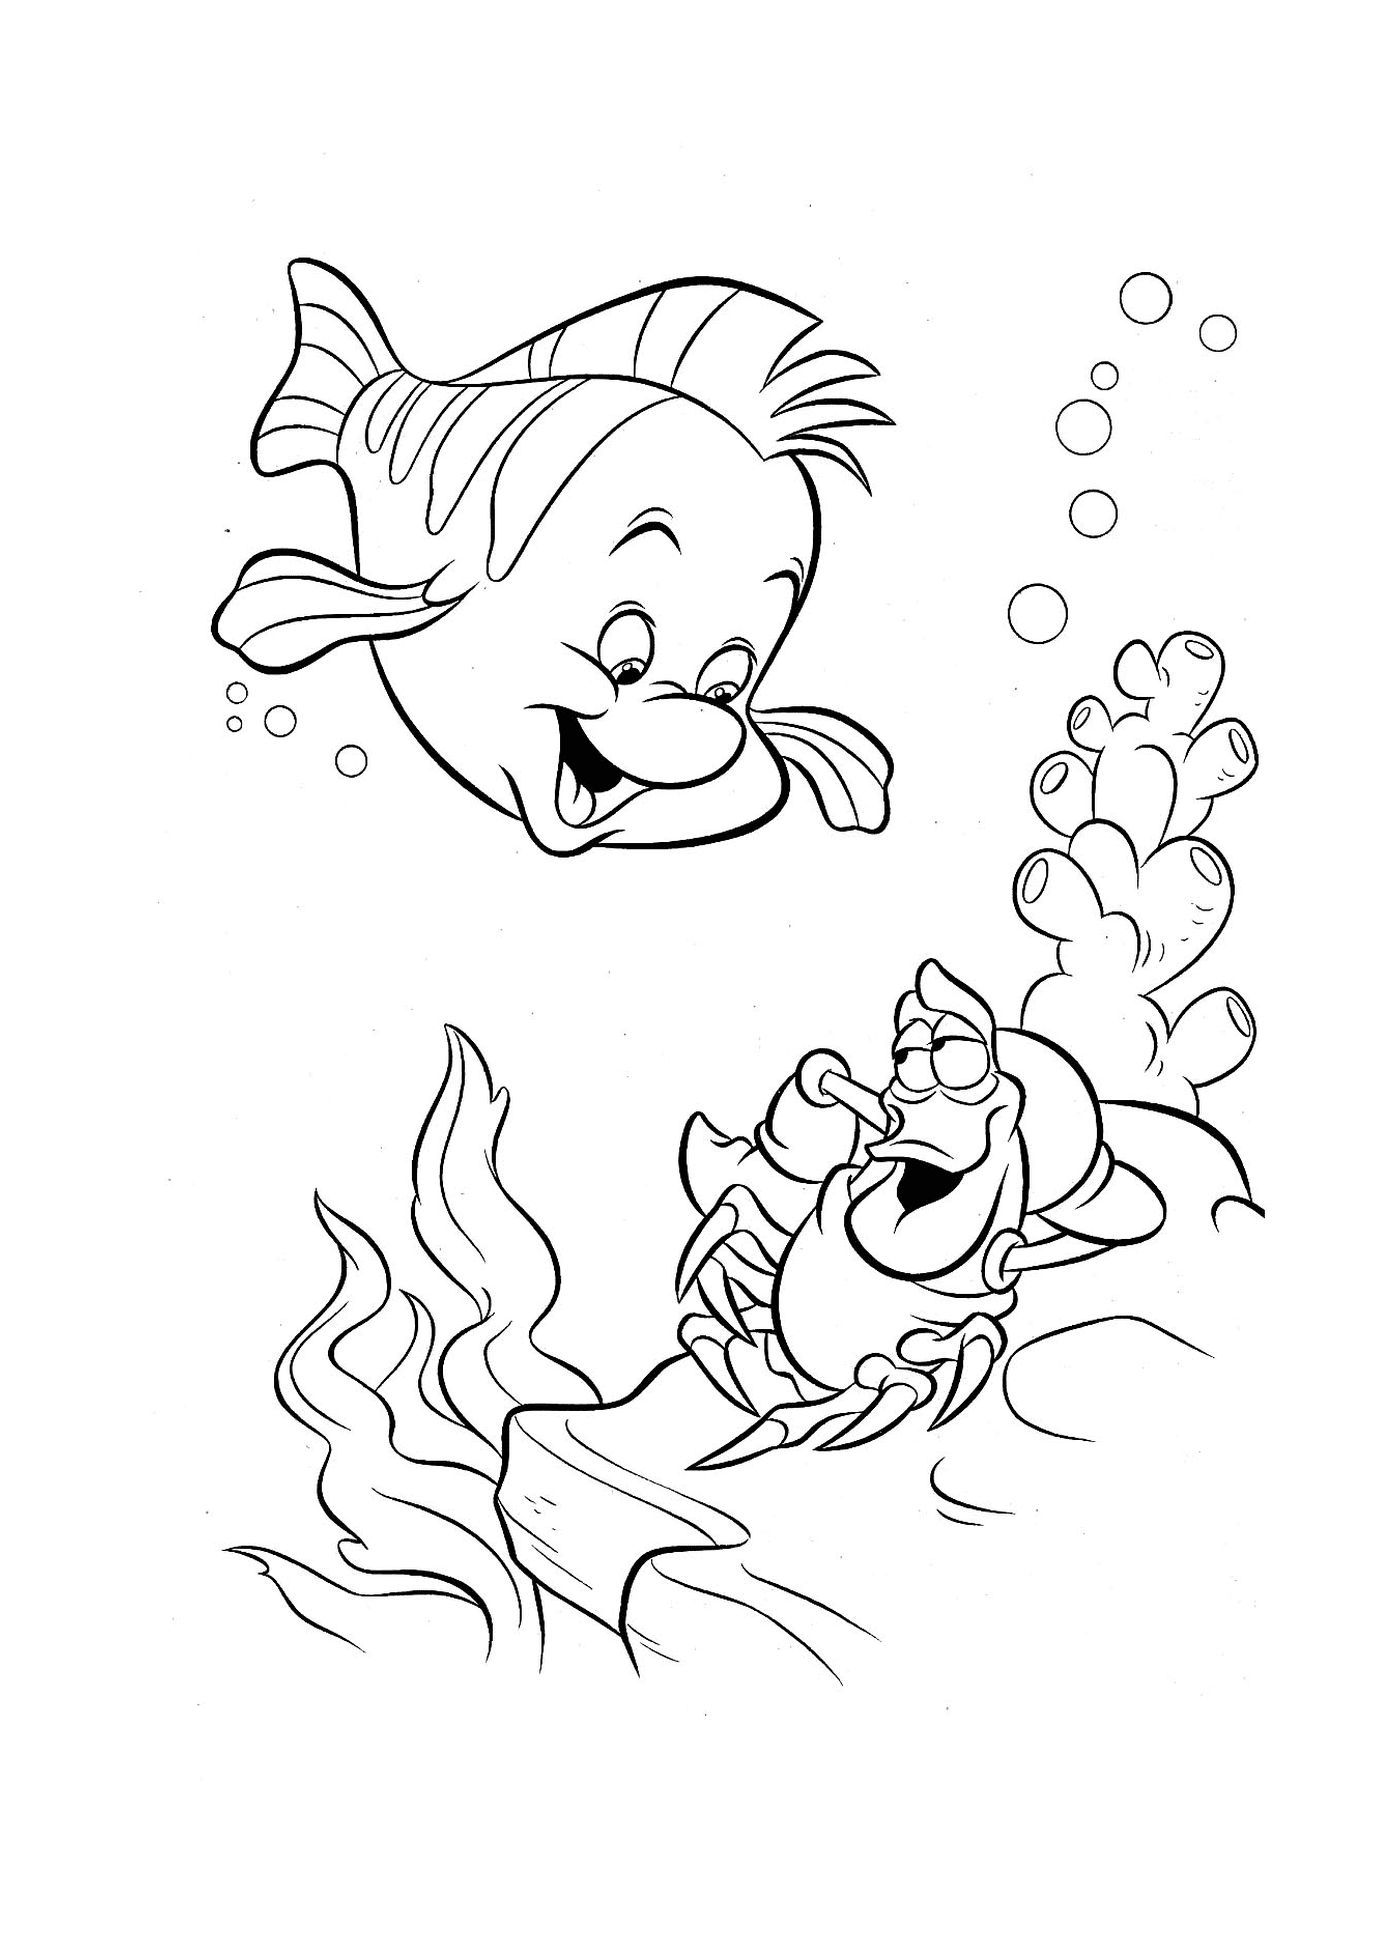  Un pesce e un granchio nuotano insieme 